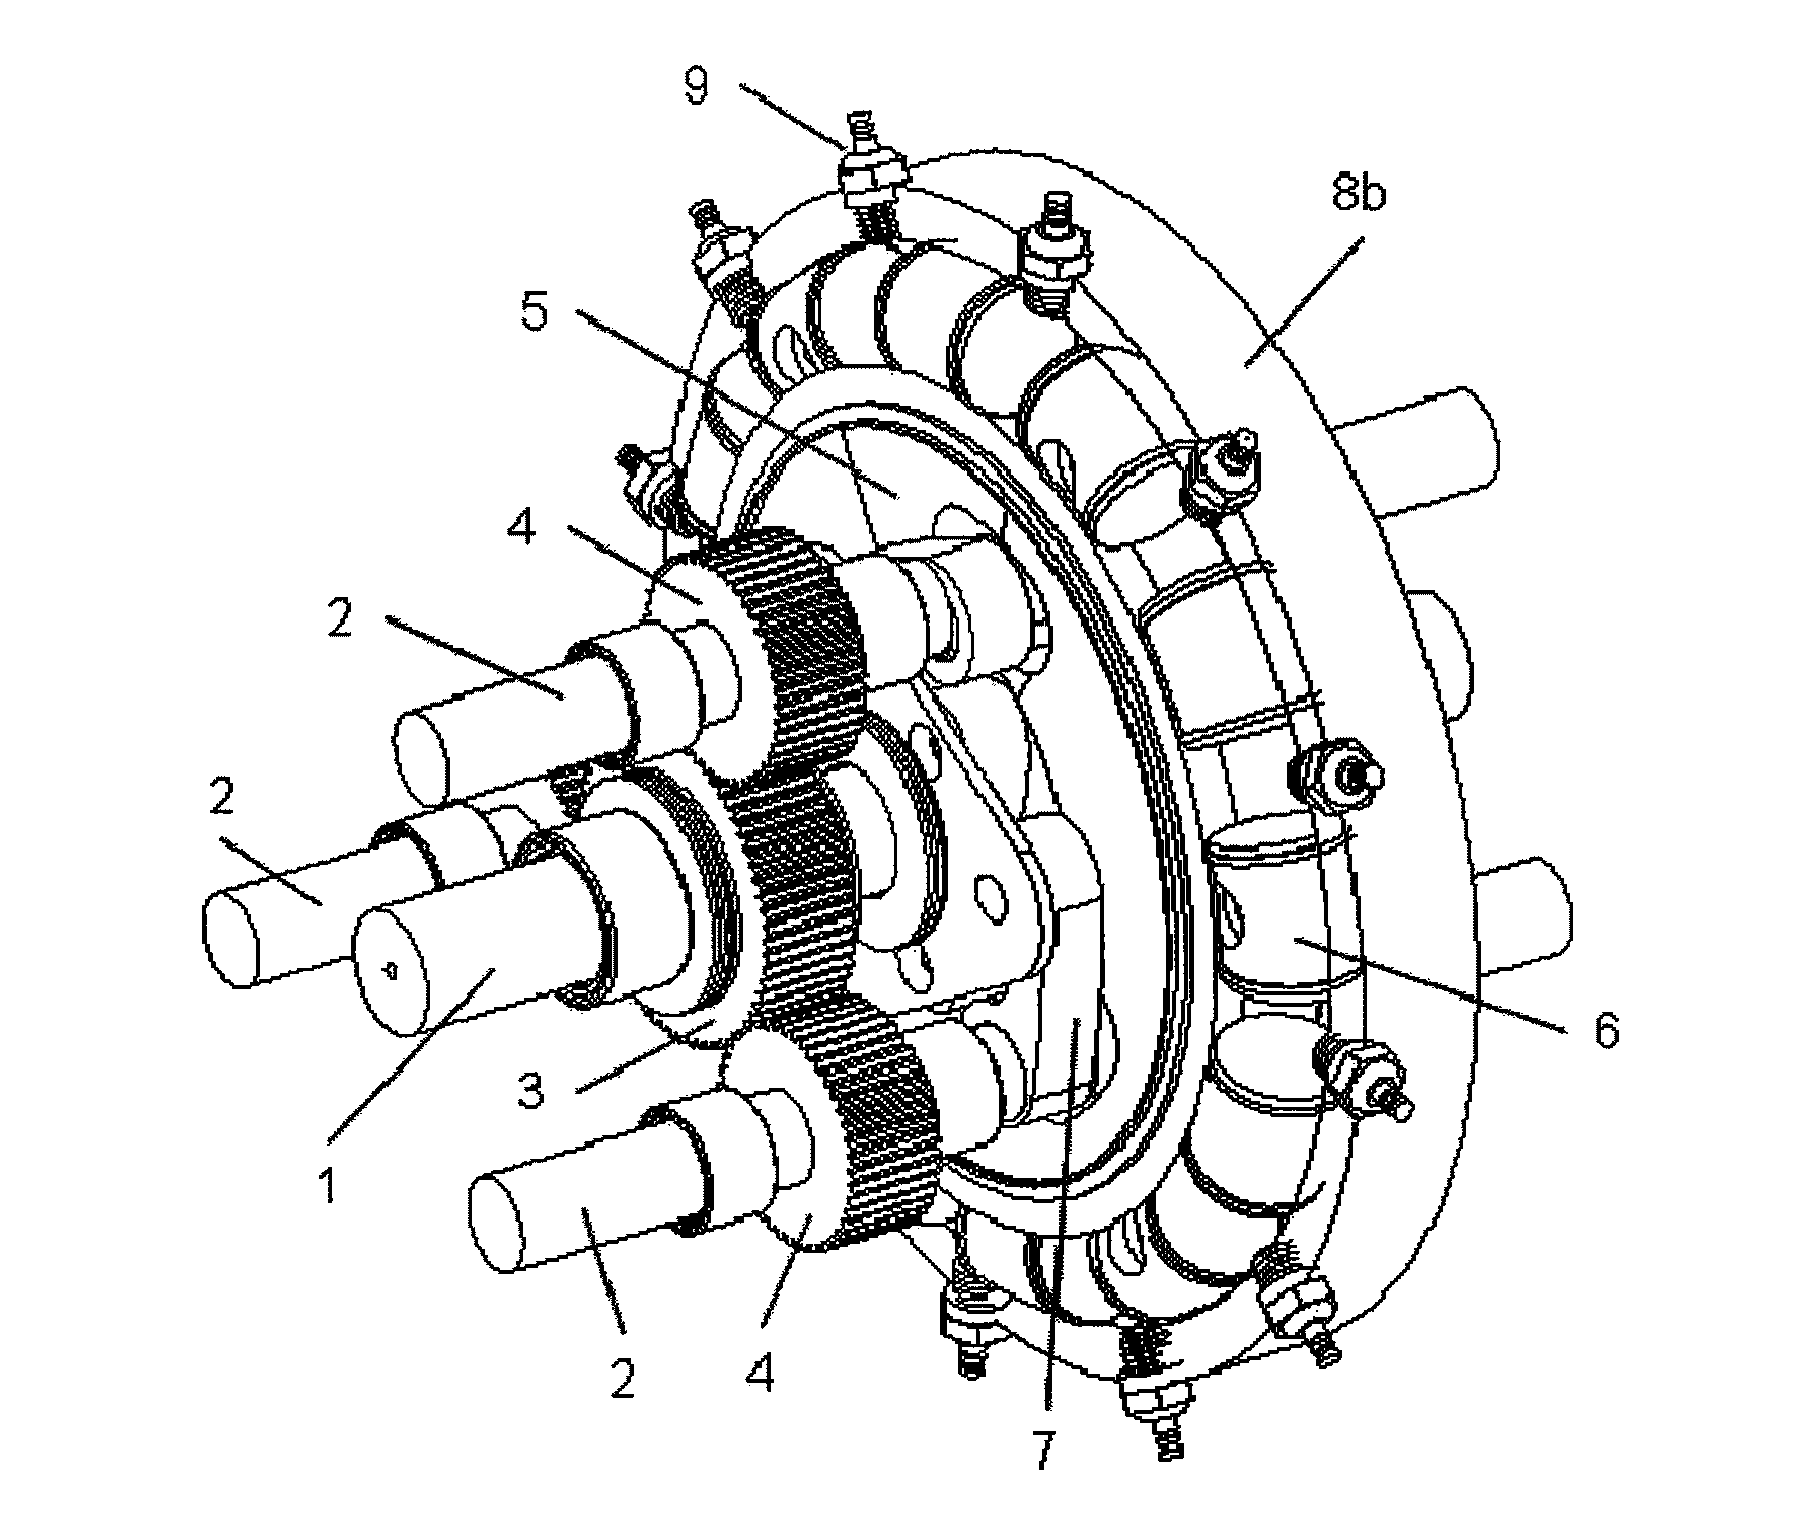 Oscillating piston engine